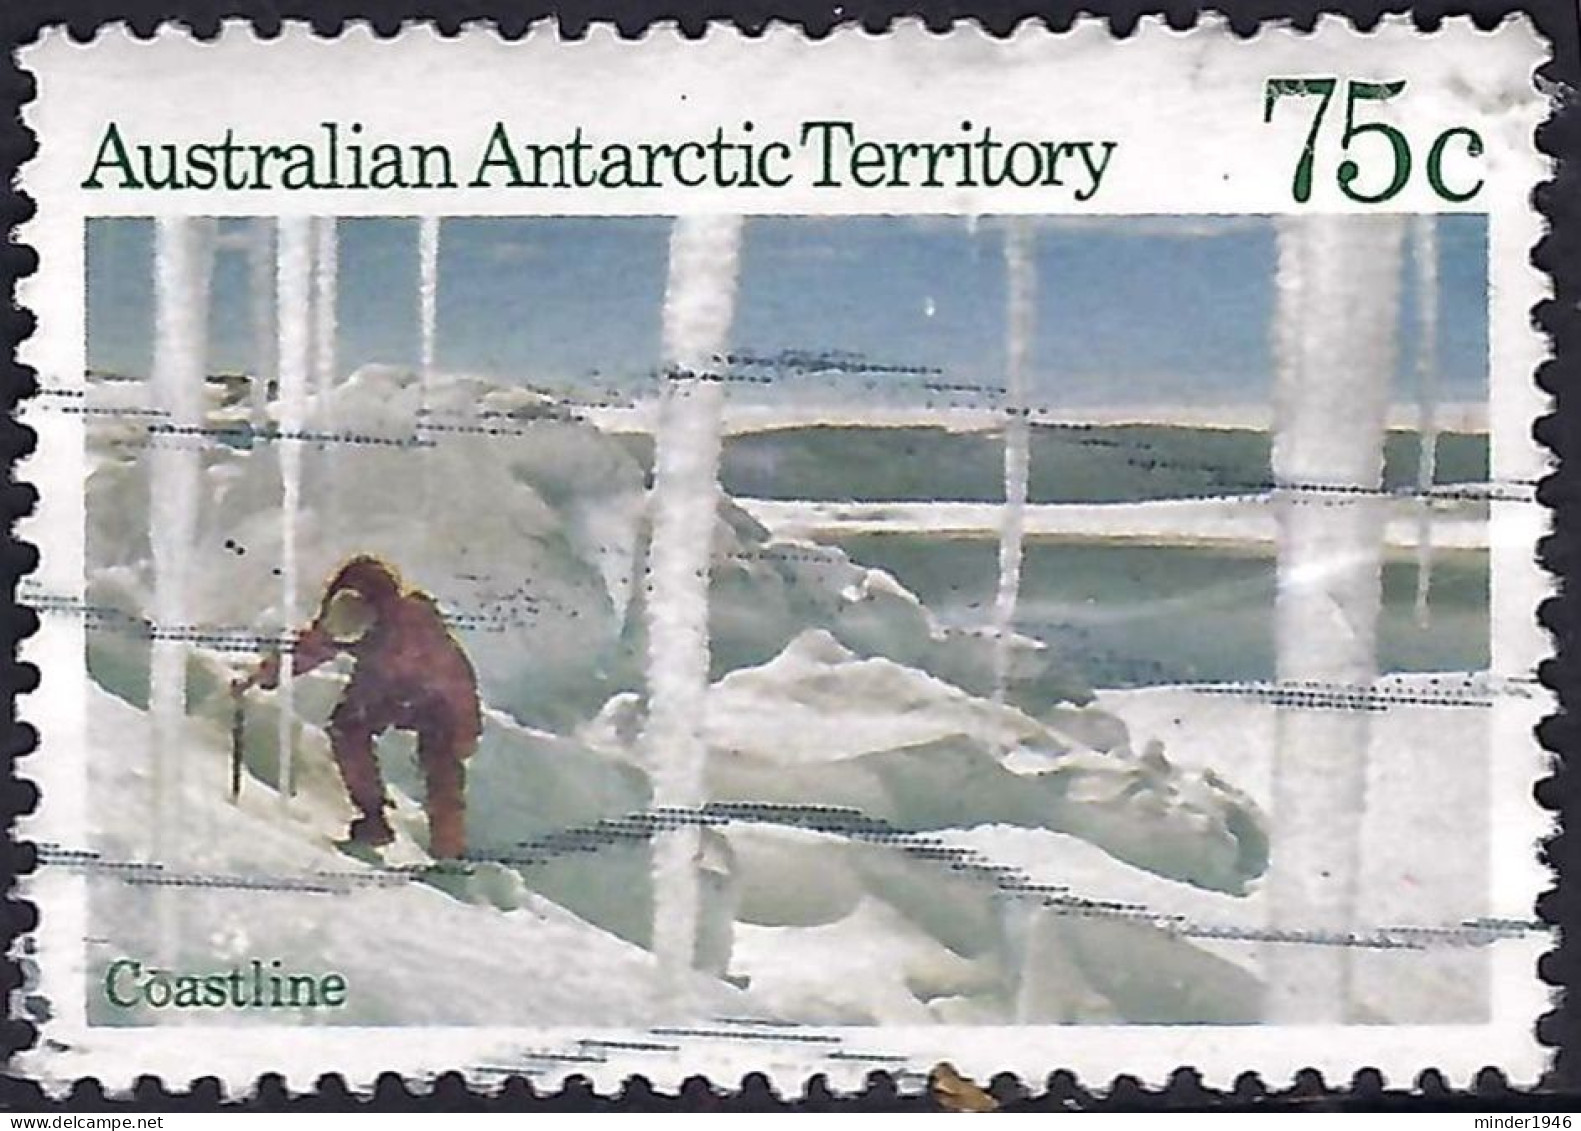 AUSTRALIAN ANTARCTIC TERRITORY (AAT) 1987 QEII 75c Multicoloured, Scenes-Coastline SG74 Used - Oblitérés